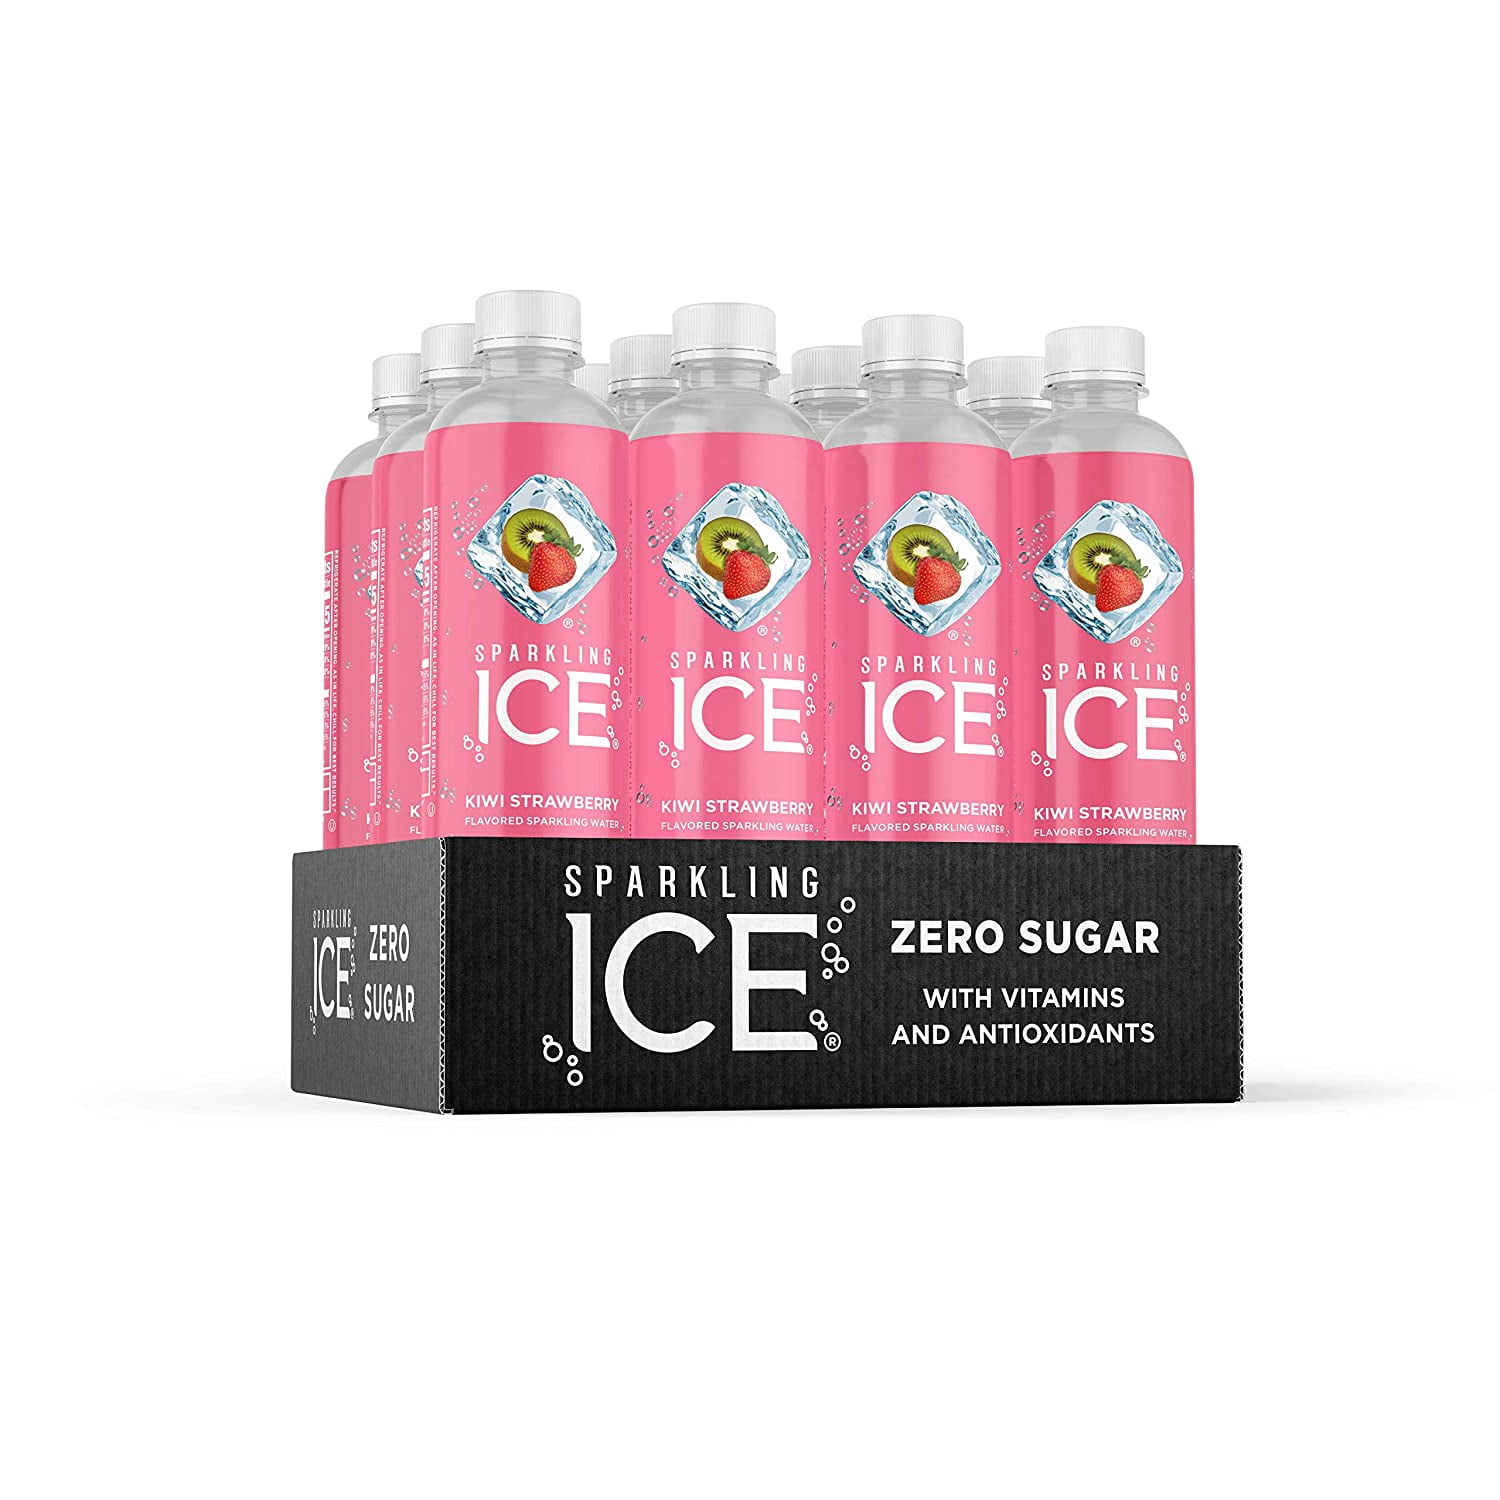 Sparkling Ice, Kiwi Strawberry Sparkling Water, with Antioxidants and Vitamins, Zero Sugar, 17 fl oz Bottles (Pack of 12)